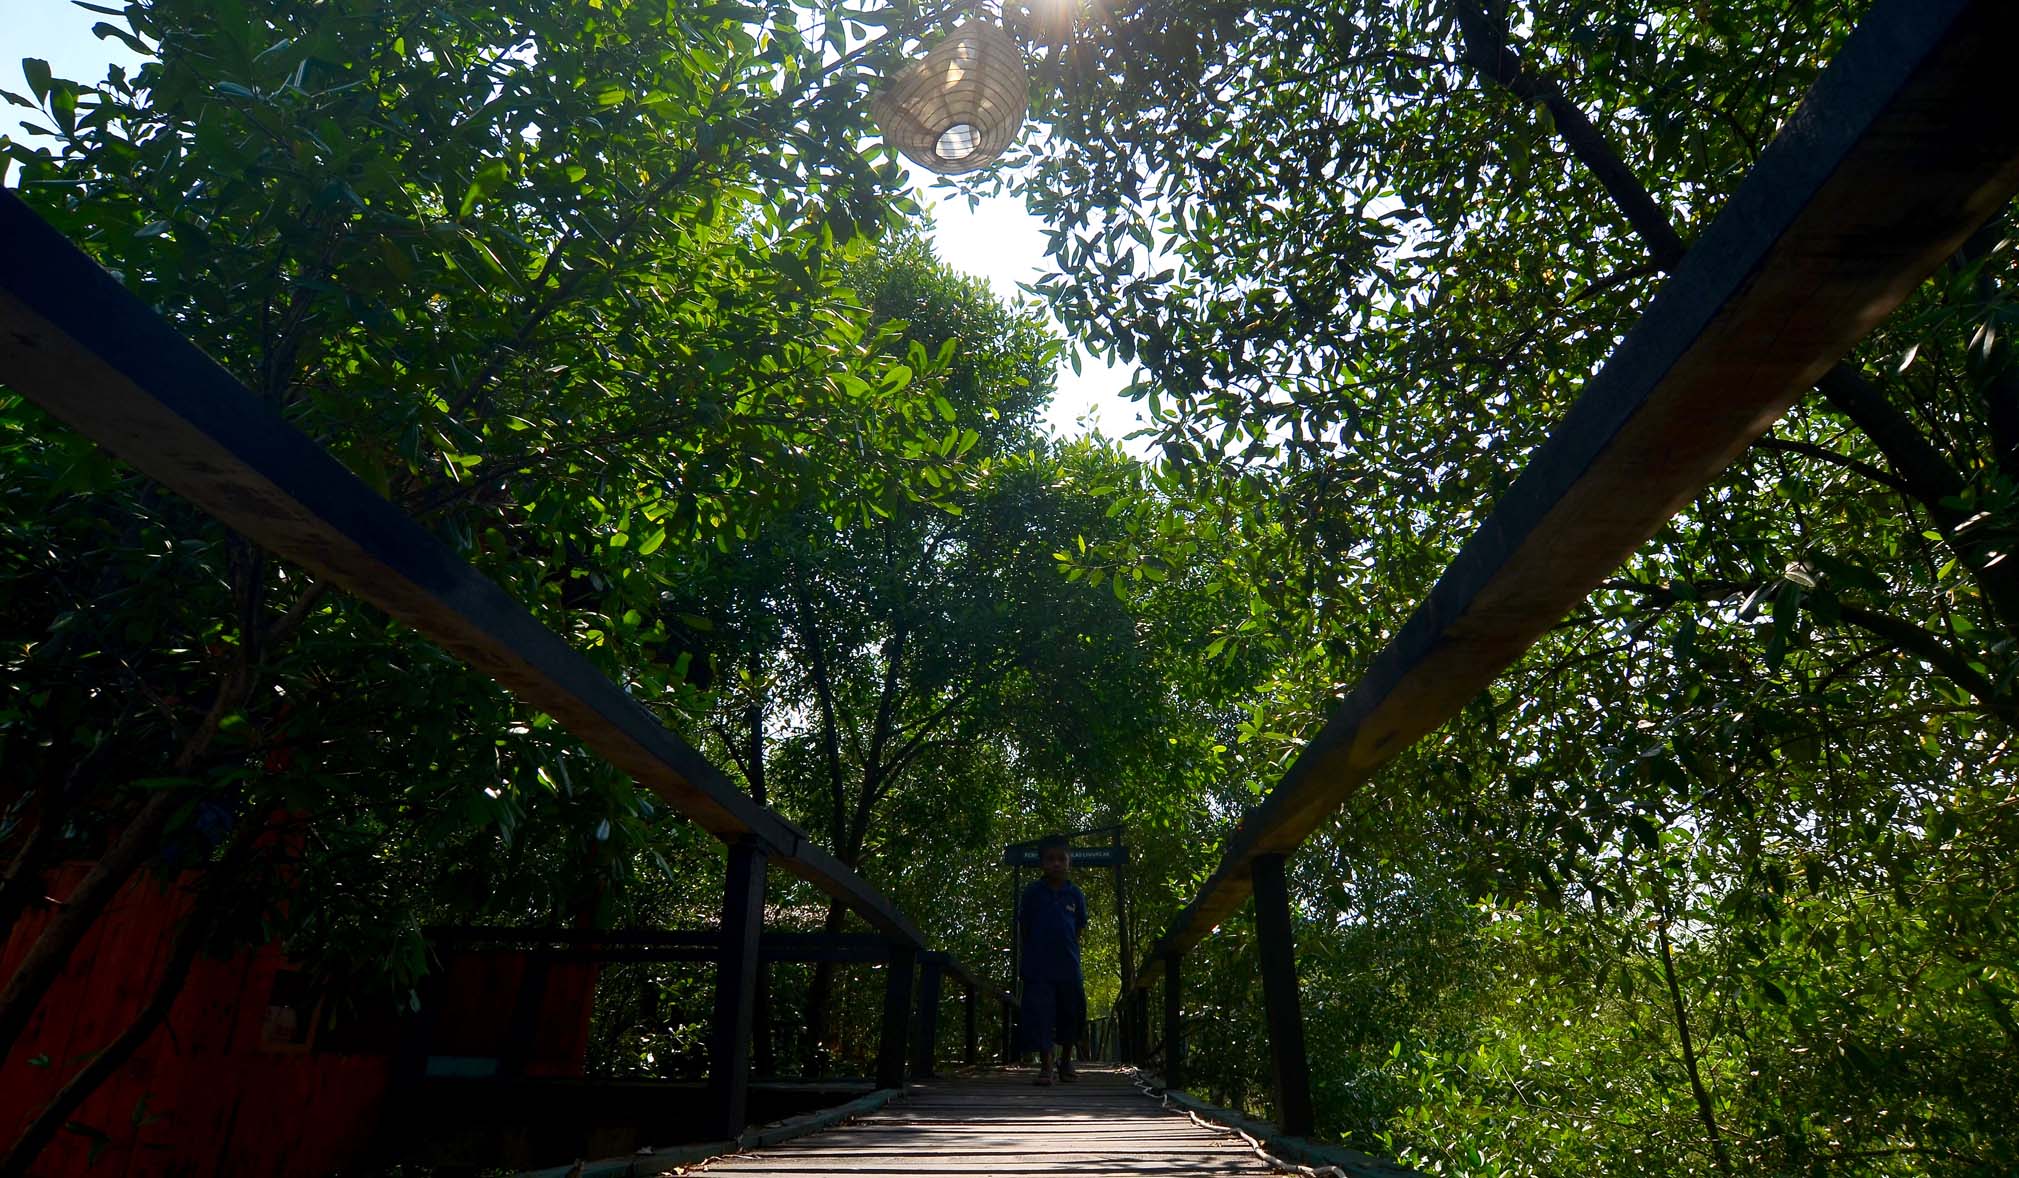 Kawasan Edo-Ekowisata Mangrove